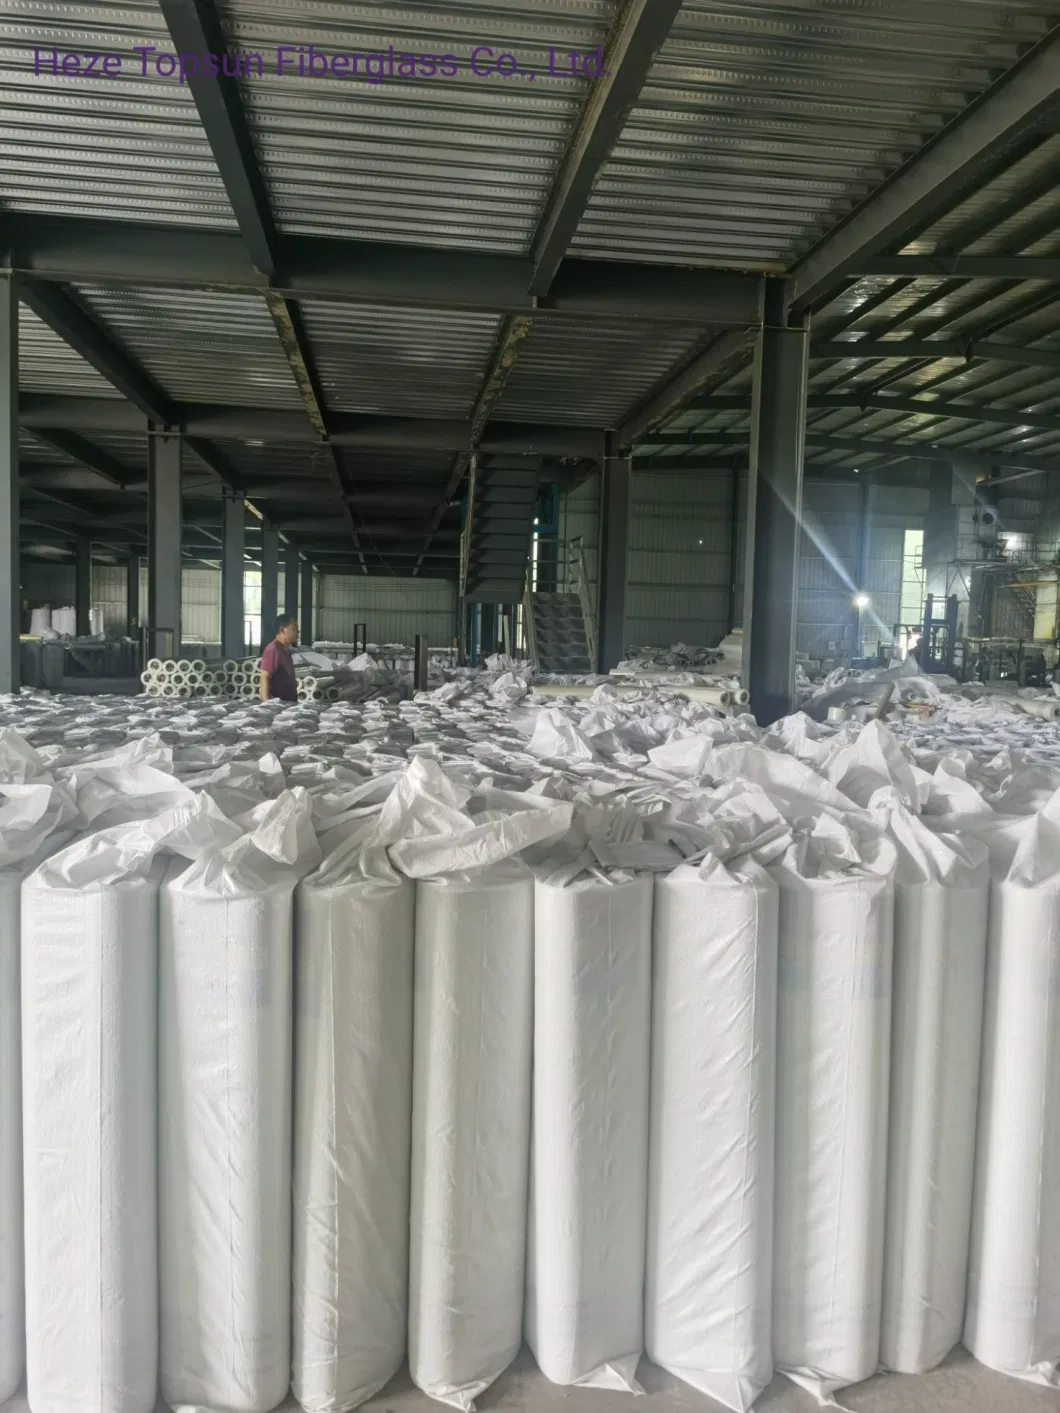 Wholesale Fiberglass Mesh 140GSM for Cement Plastering Works